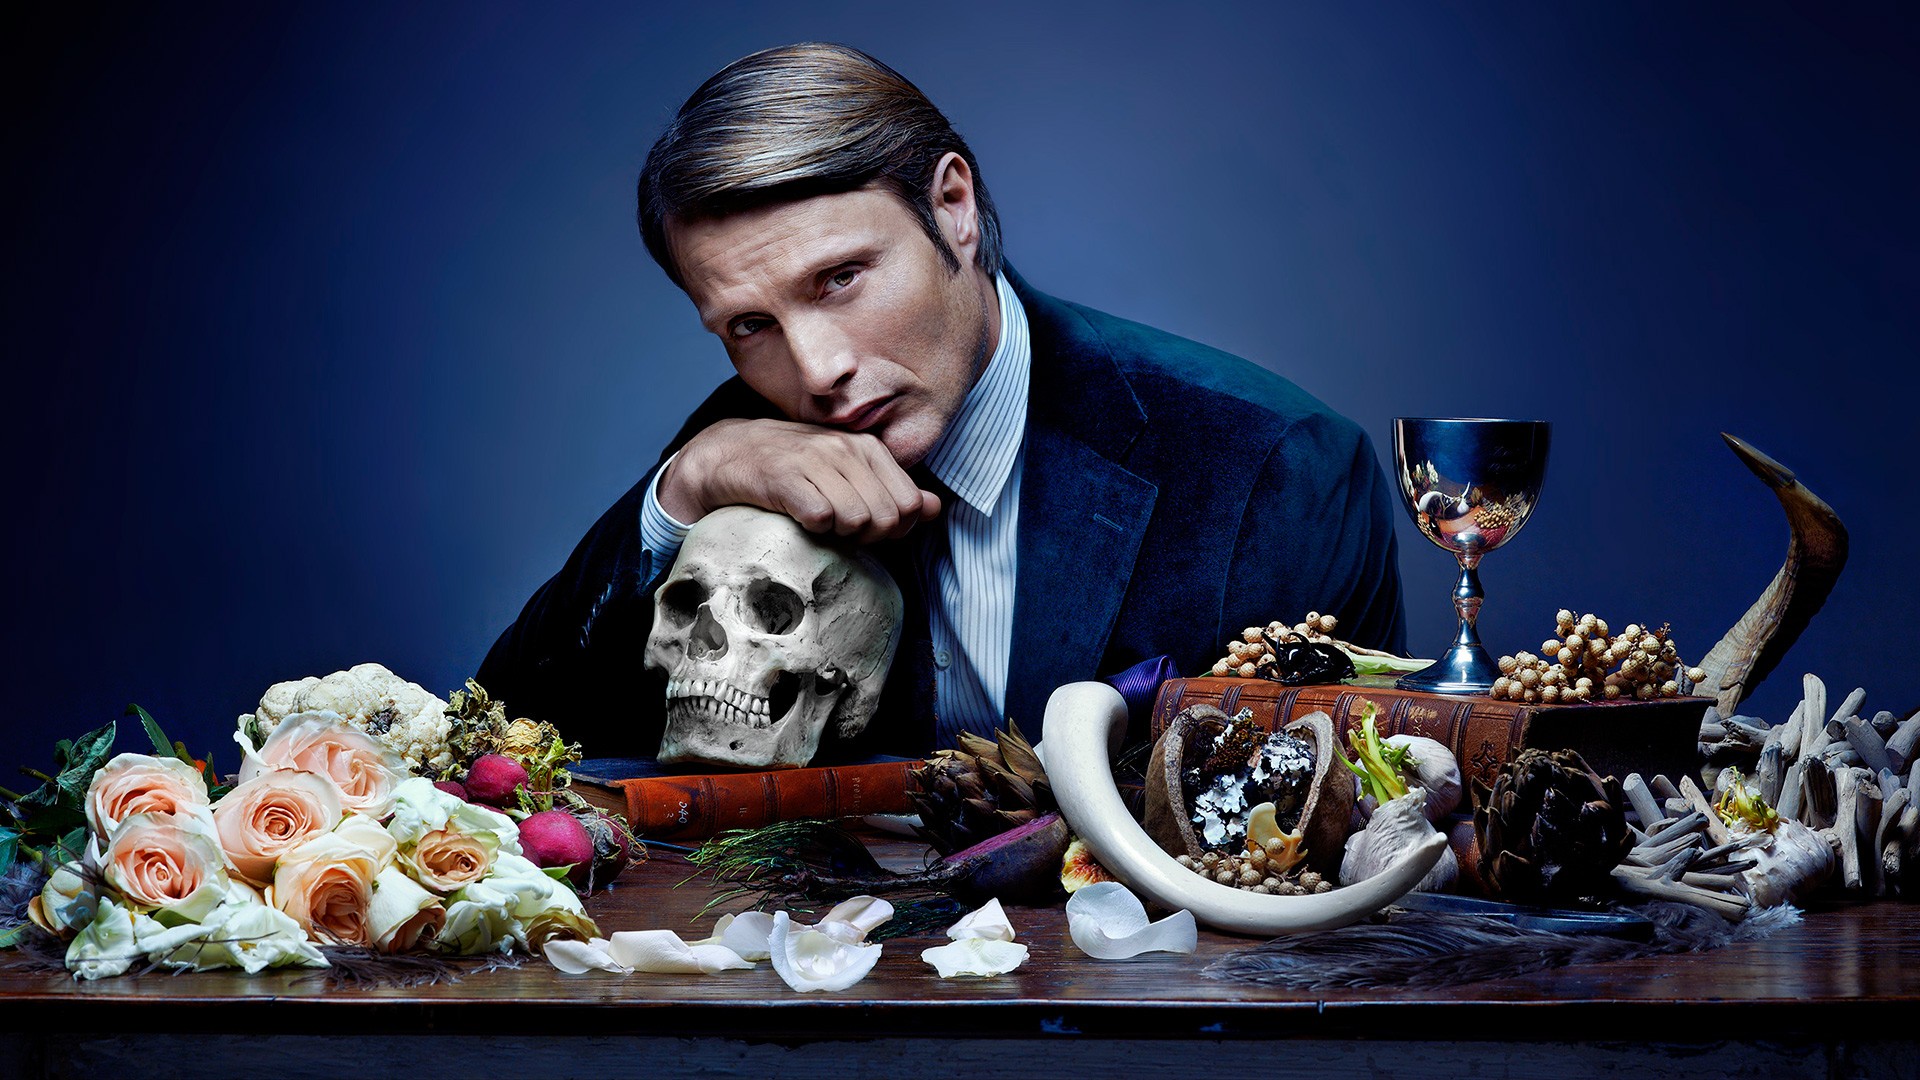 People 1920x1080 Hannibal Hannibal Lecter Mads Mikkelsen TV series skull men food flowers actor looking at viewer blue background gradient